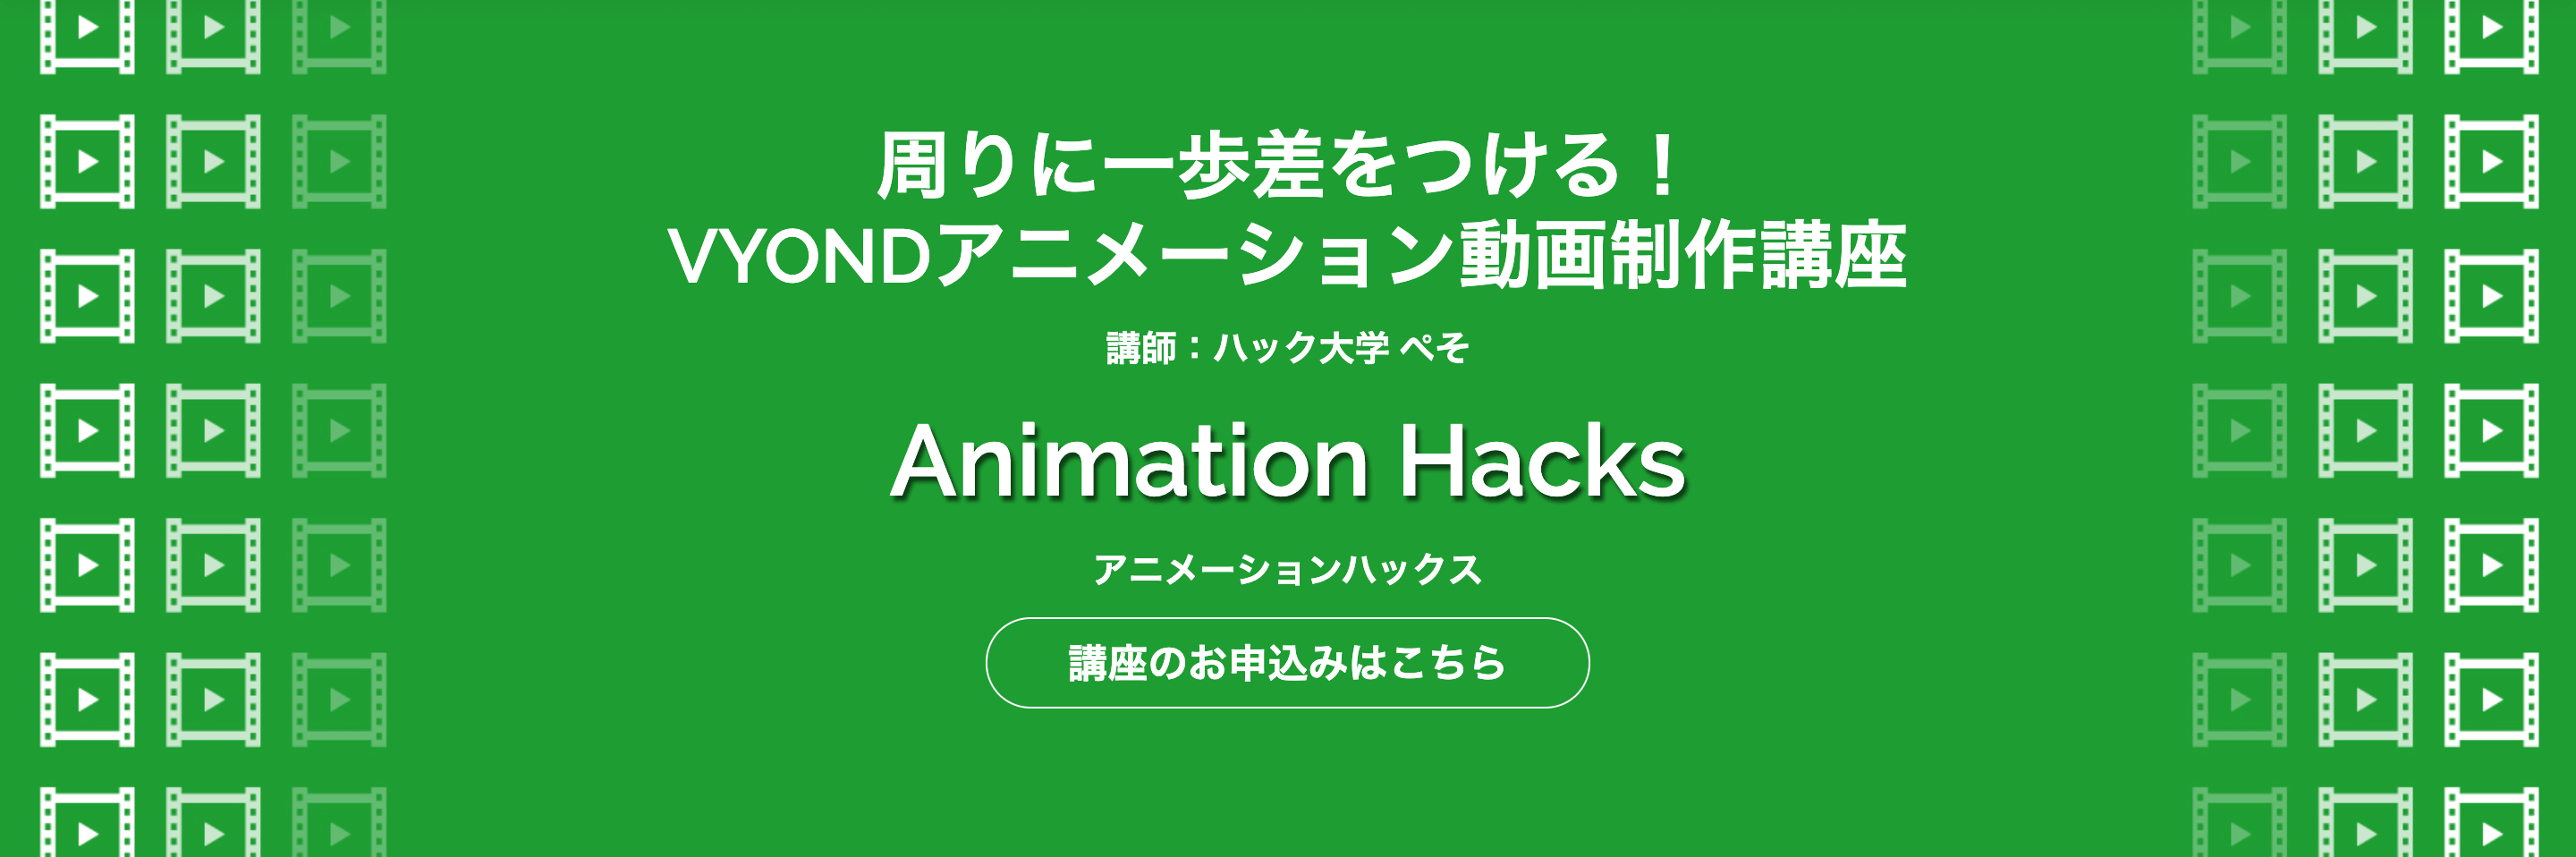 Animetion Hacks